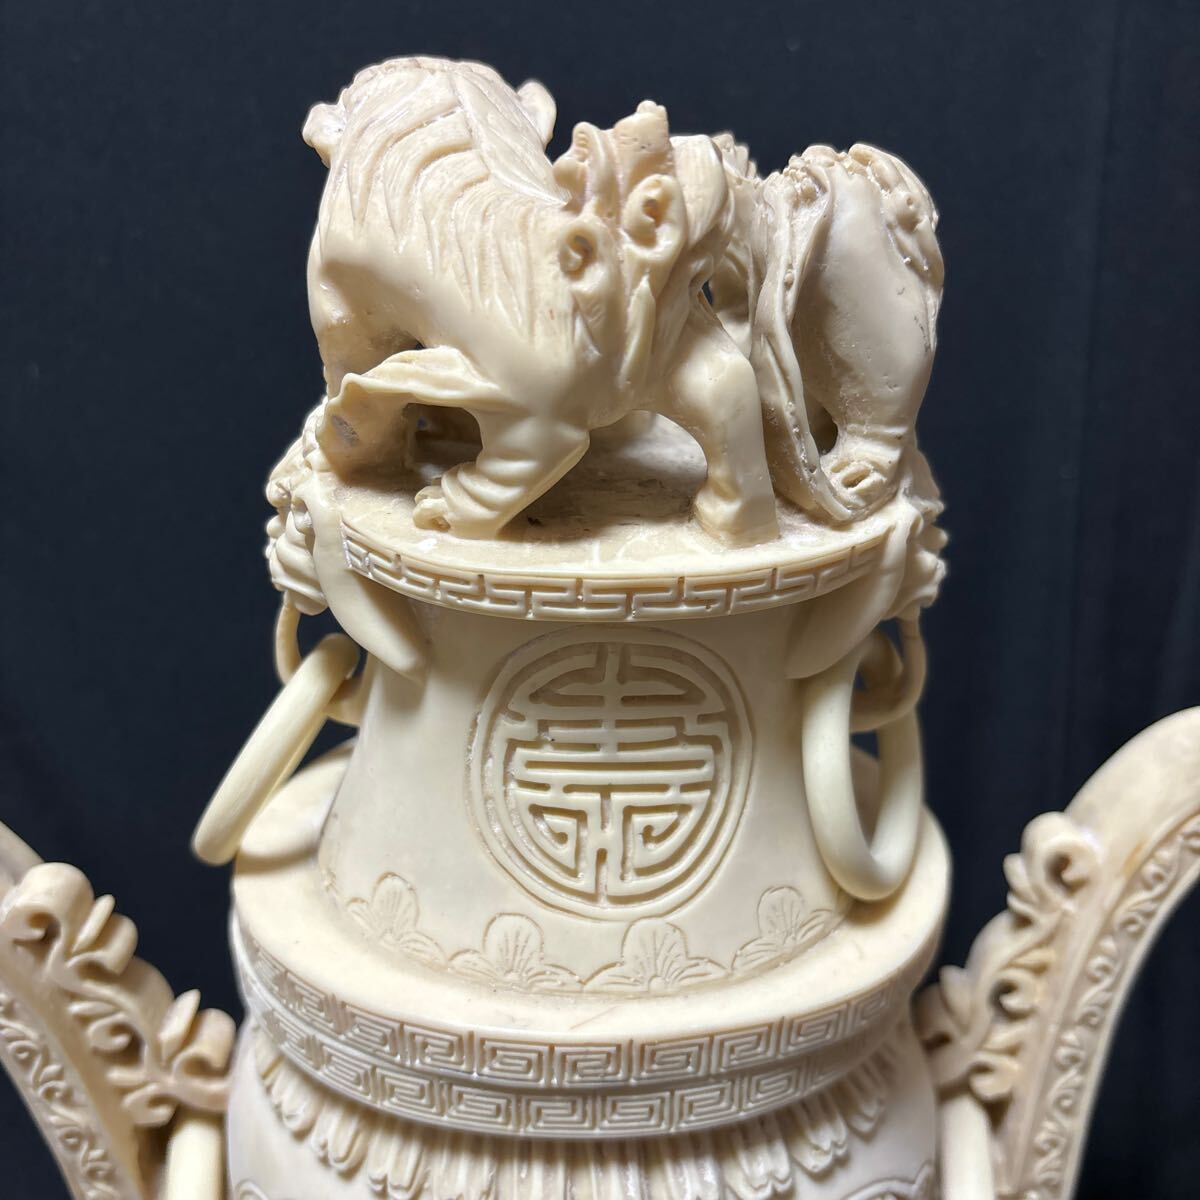 中國古美術 象牙風香炉 三つ脚 台座付き 高さ30から35㌢ 香炉 乾隆 獅子 中国美術 細密彫刻 玉獅子 香道具 飾り物 中国古玩の画像3